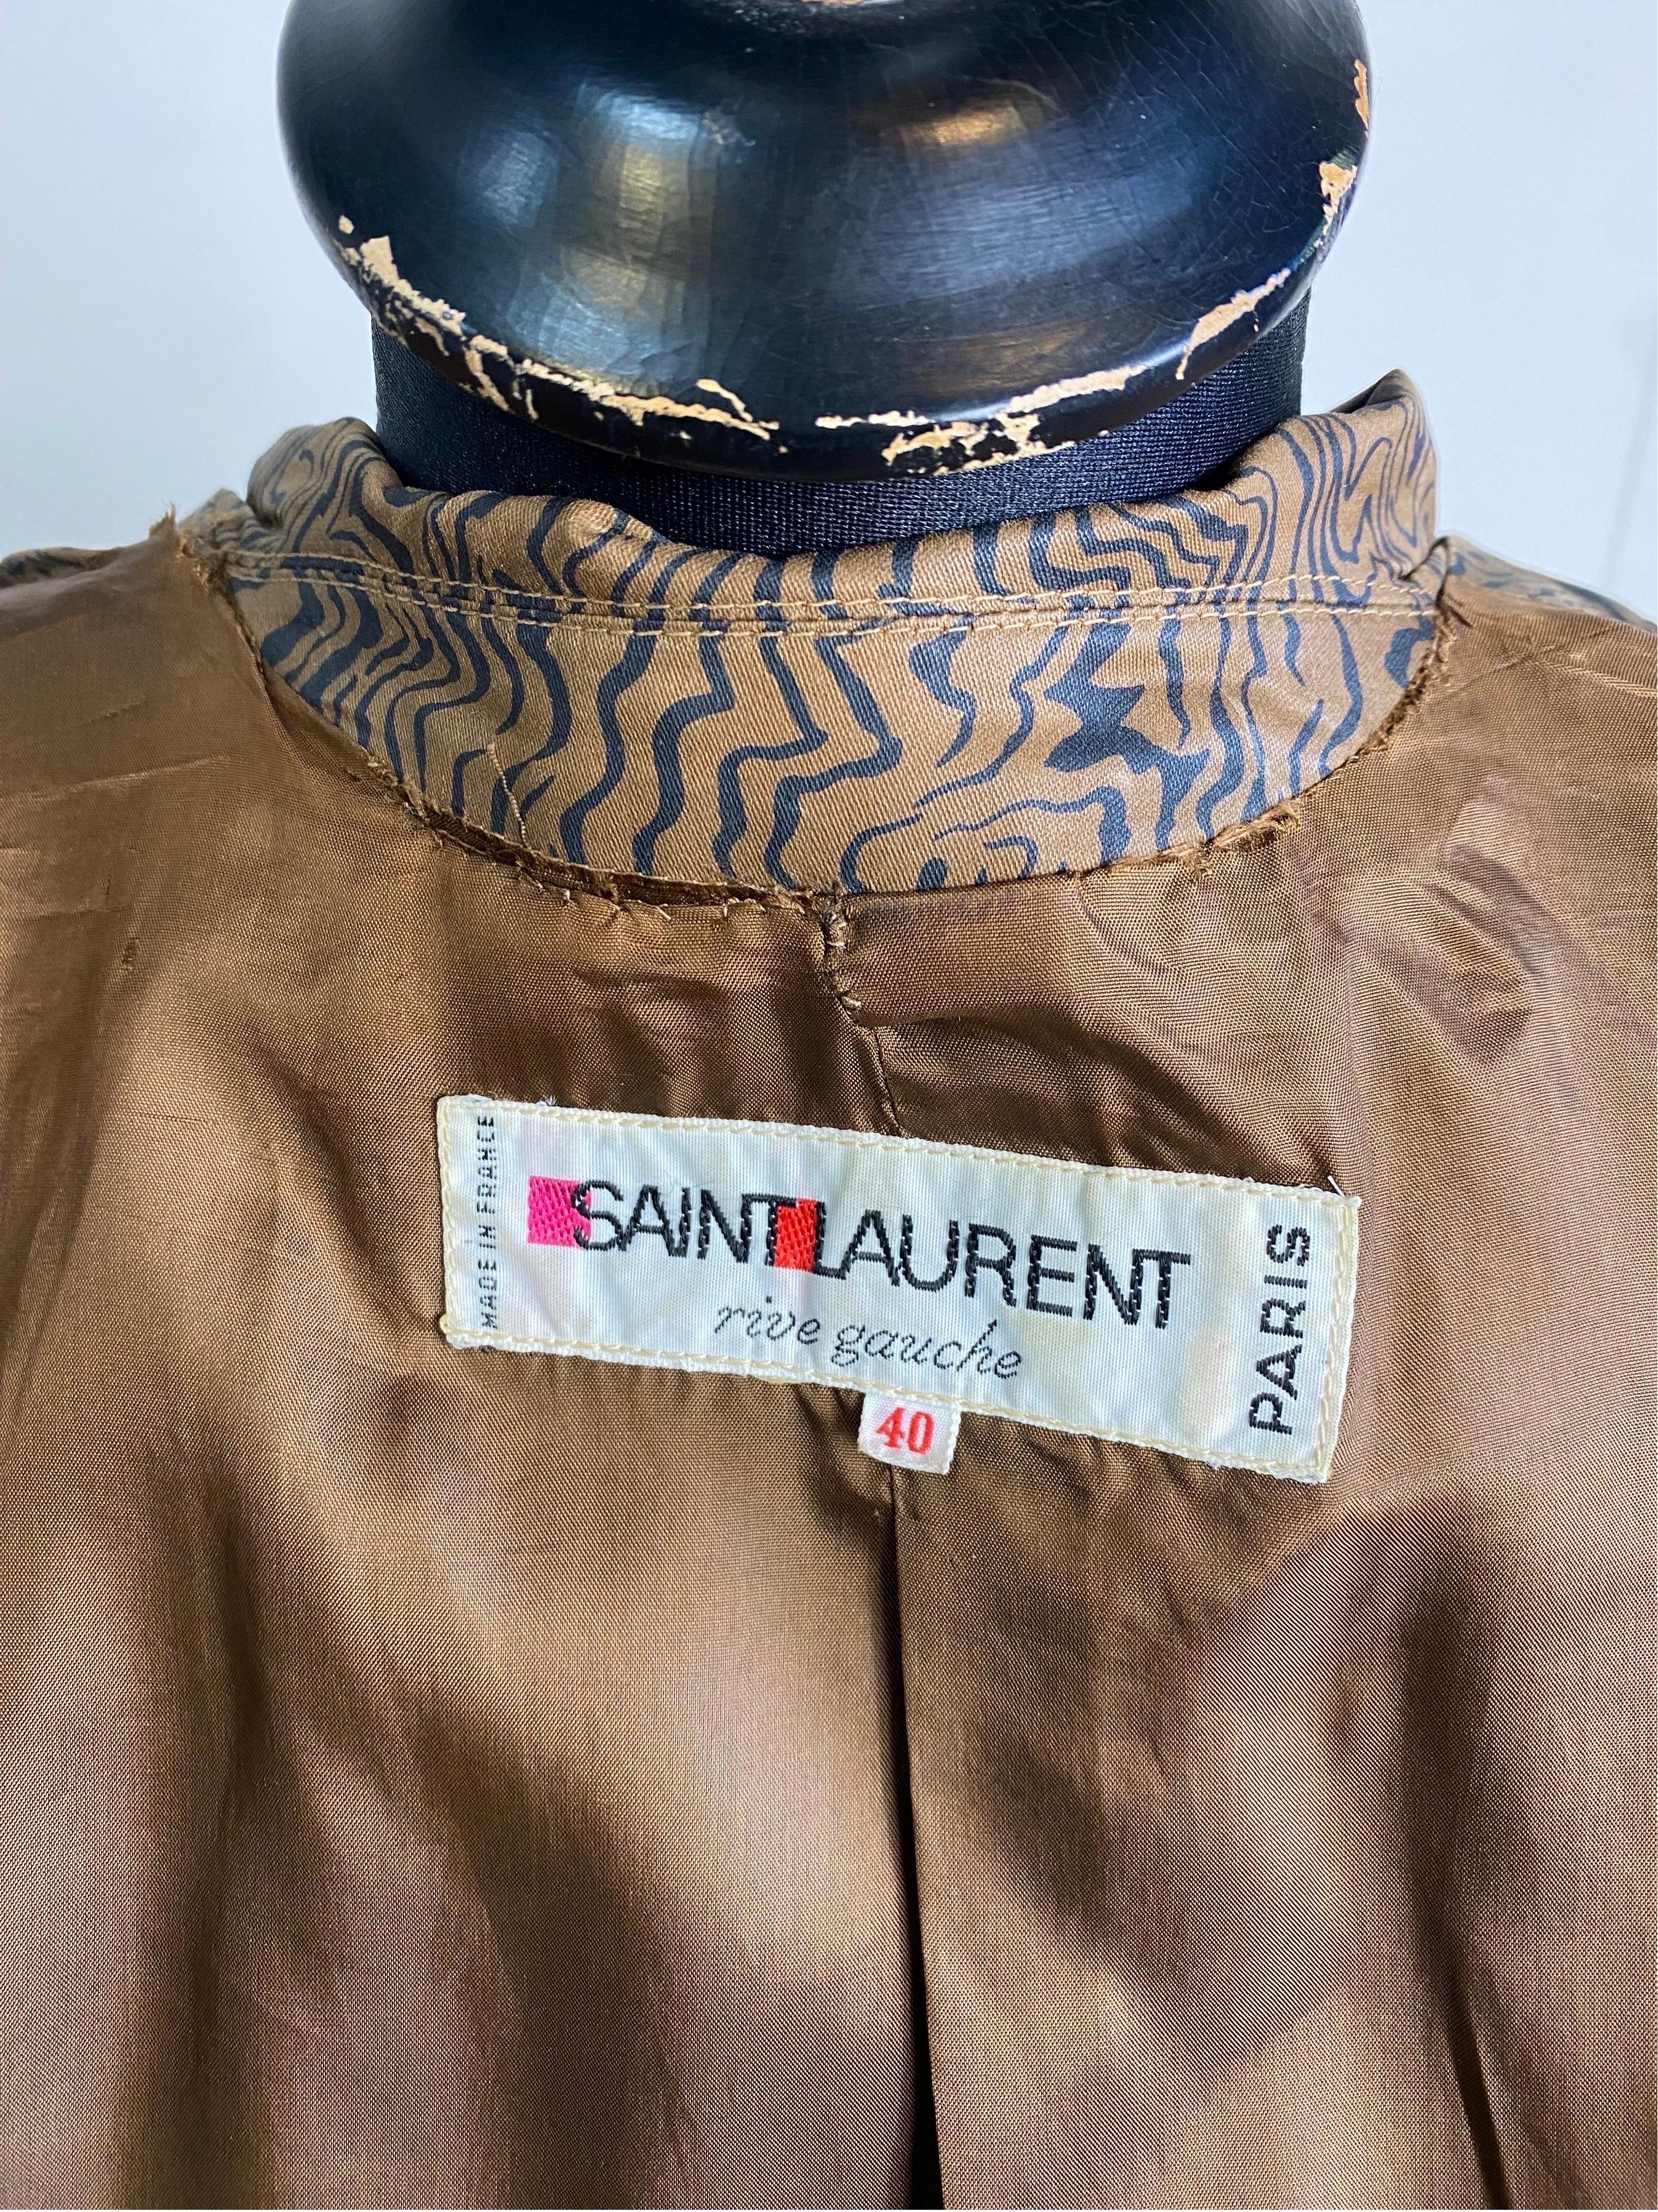 Saint Laurent vintage Zebra trench Coat For Sale 5